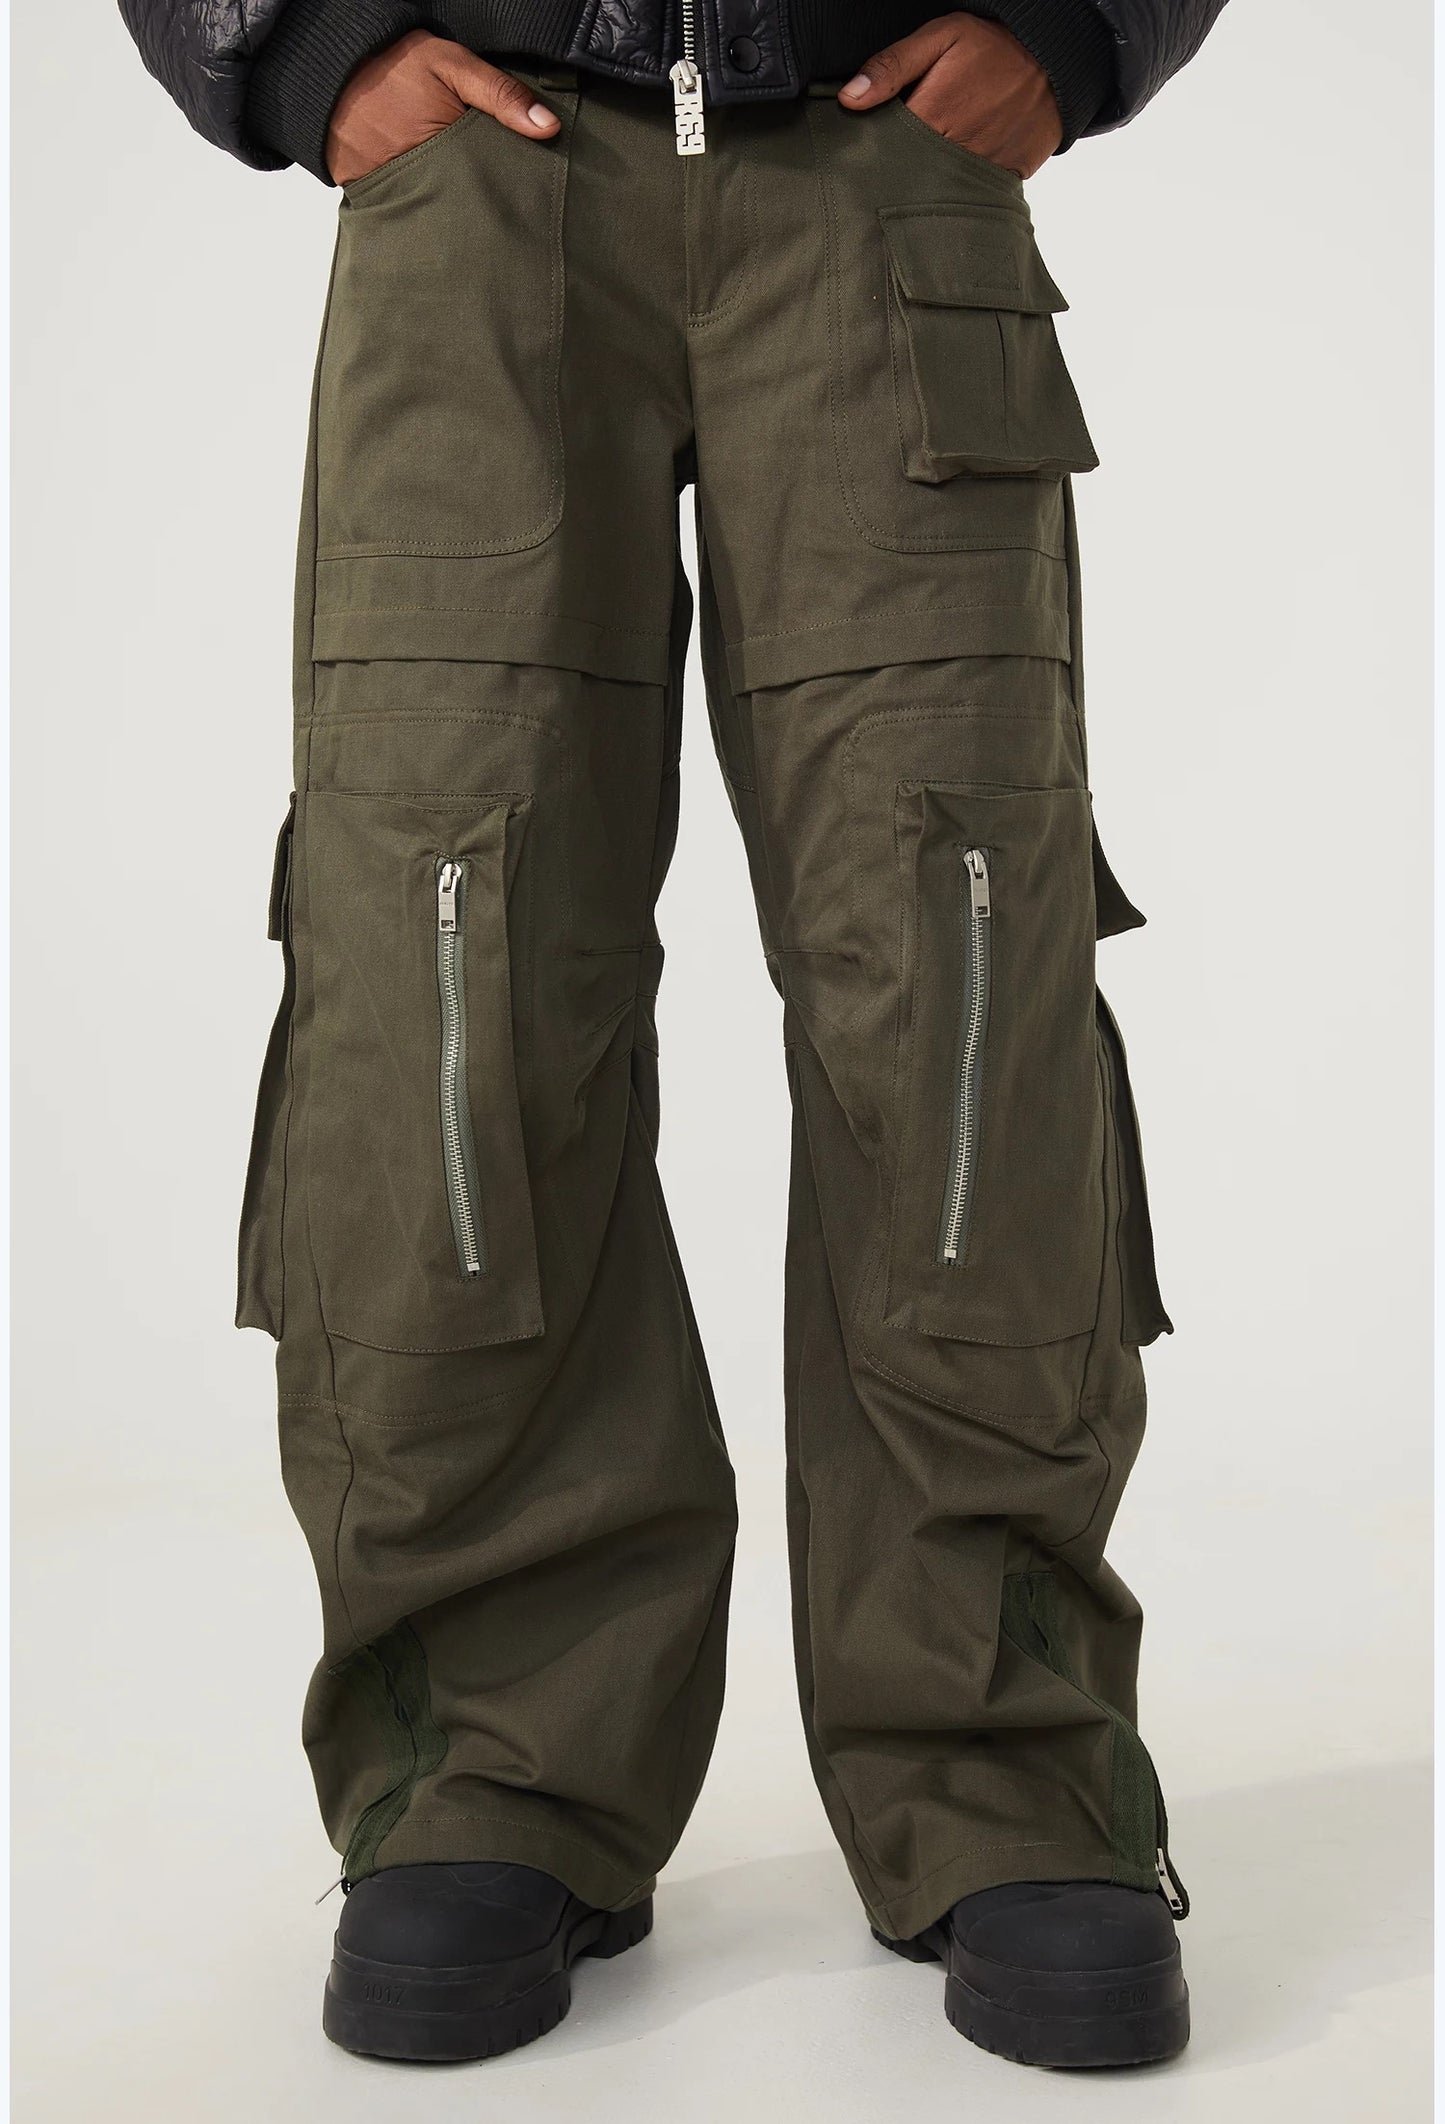 R69 Design tooling zipper pants